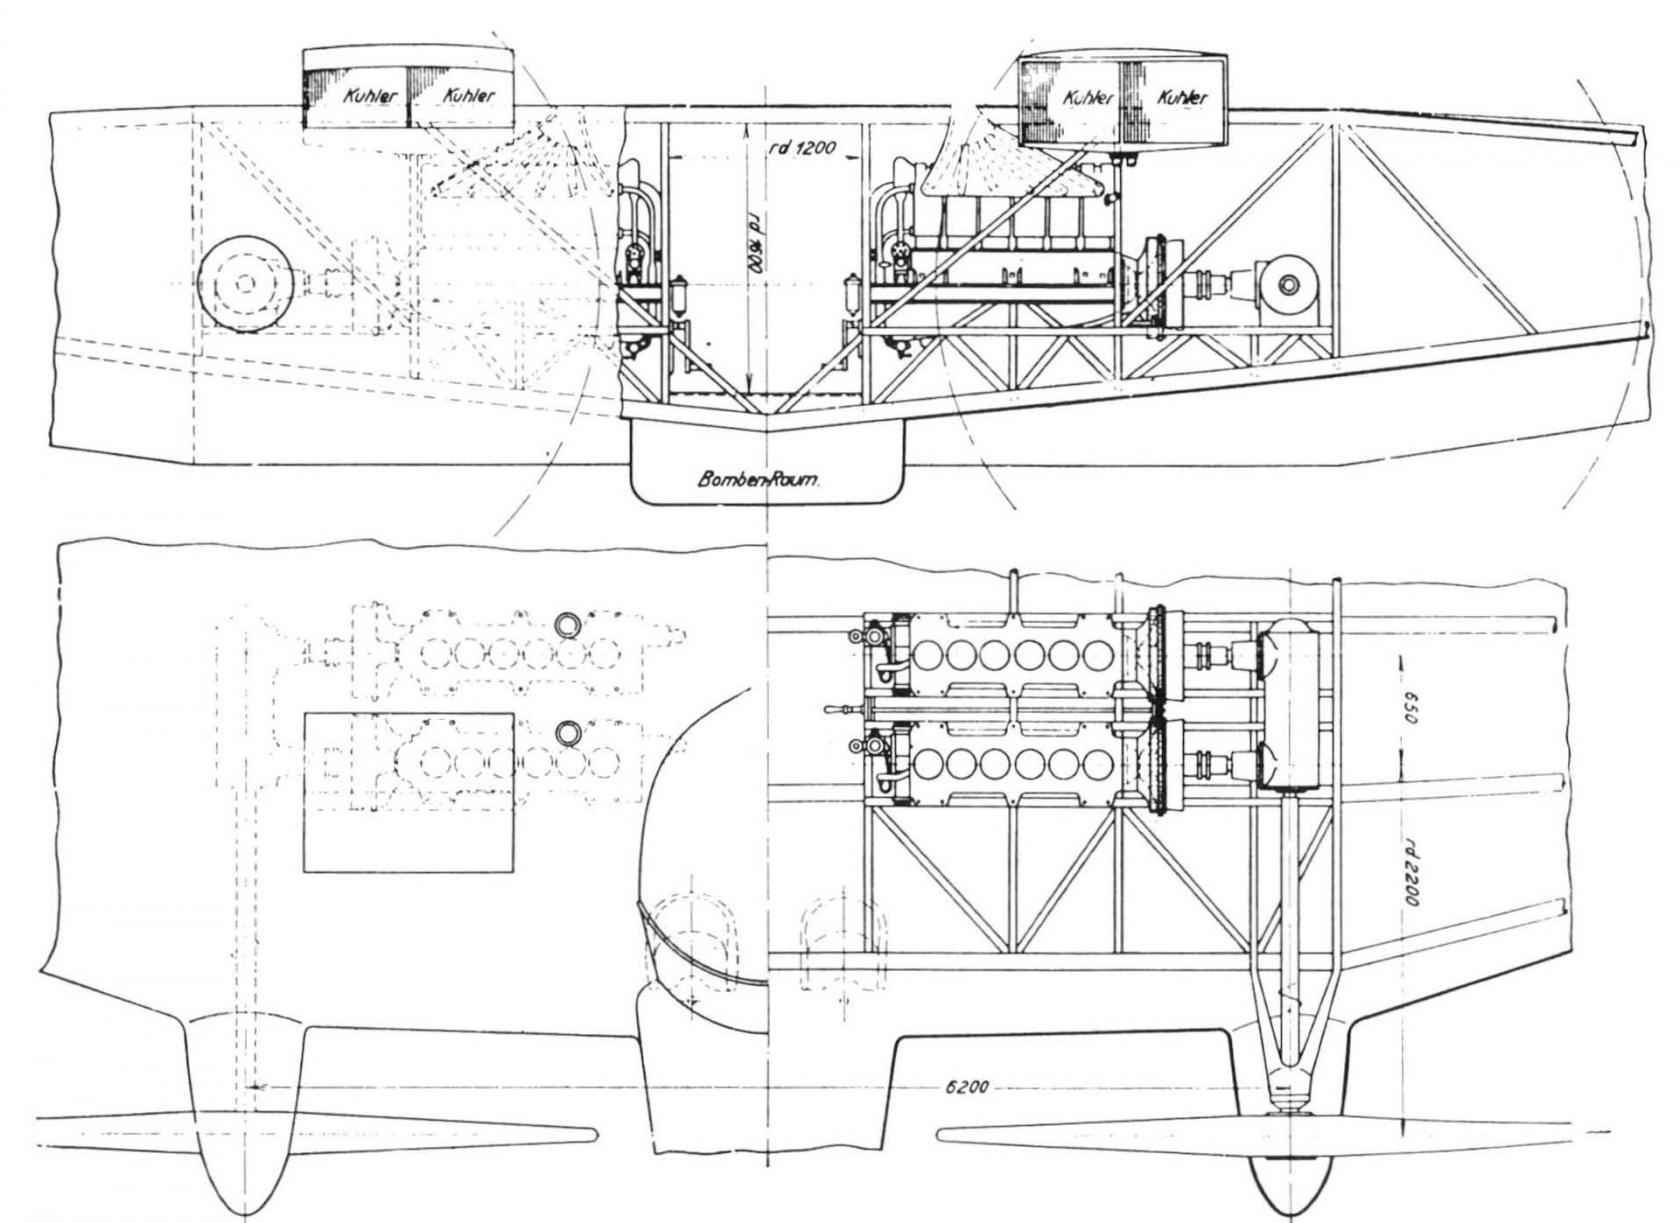 Тяжелые бомбардировщики Junkers-Fokker Werke A.G.. Проект Junkers R.I. Германия